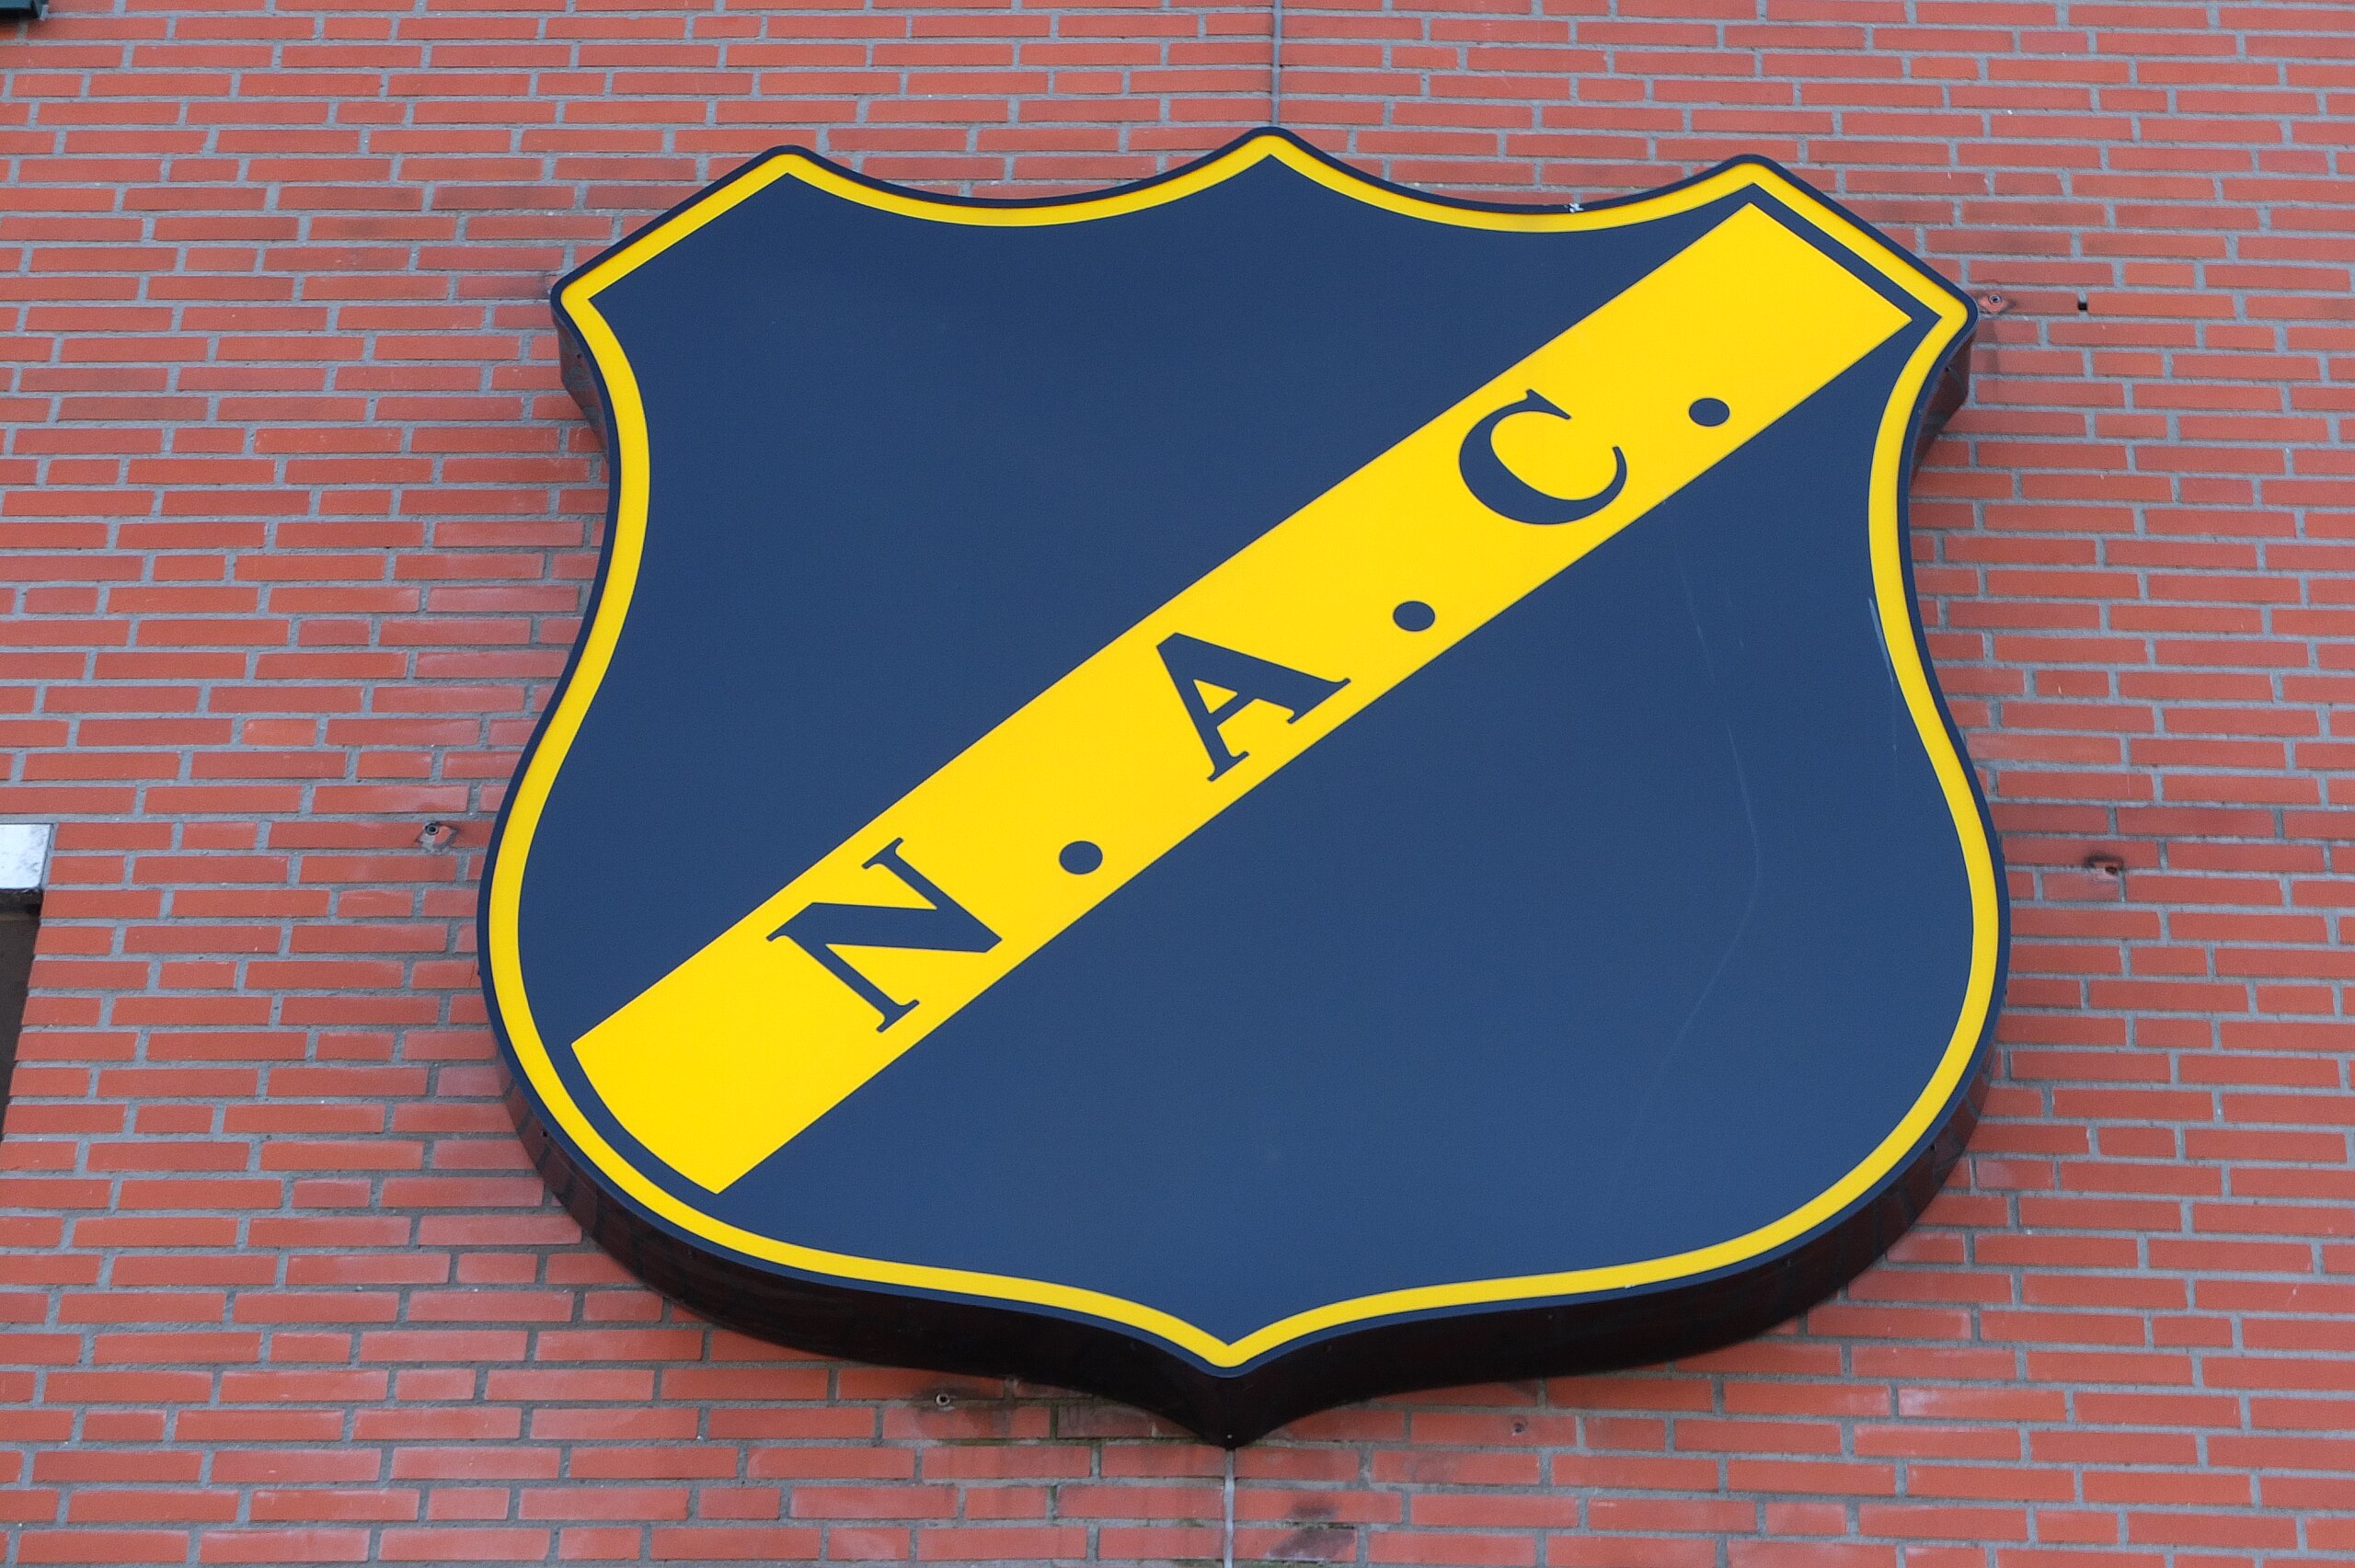 NAC Breda - Wikipedia